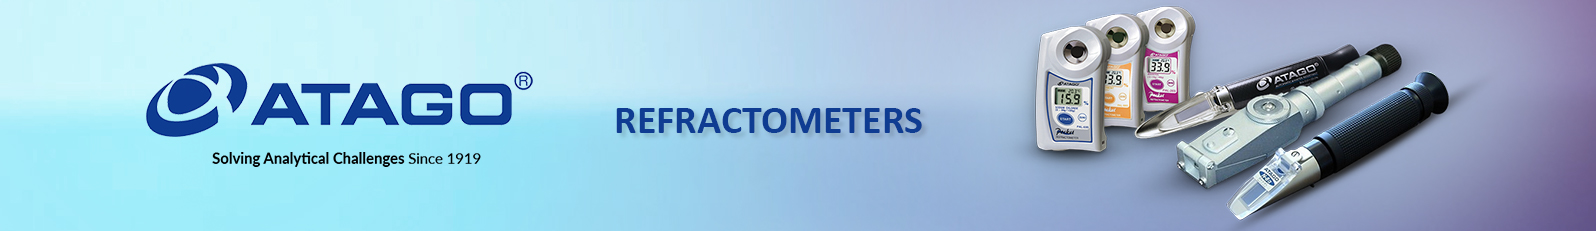 Atago Refractometers